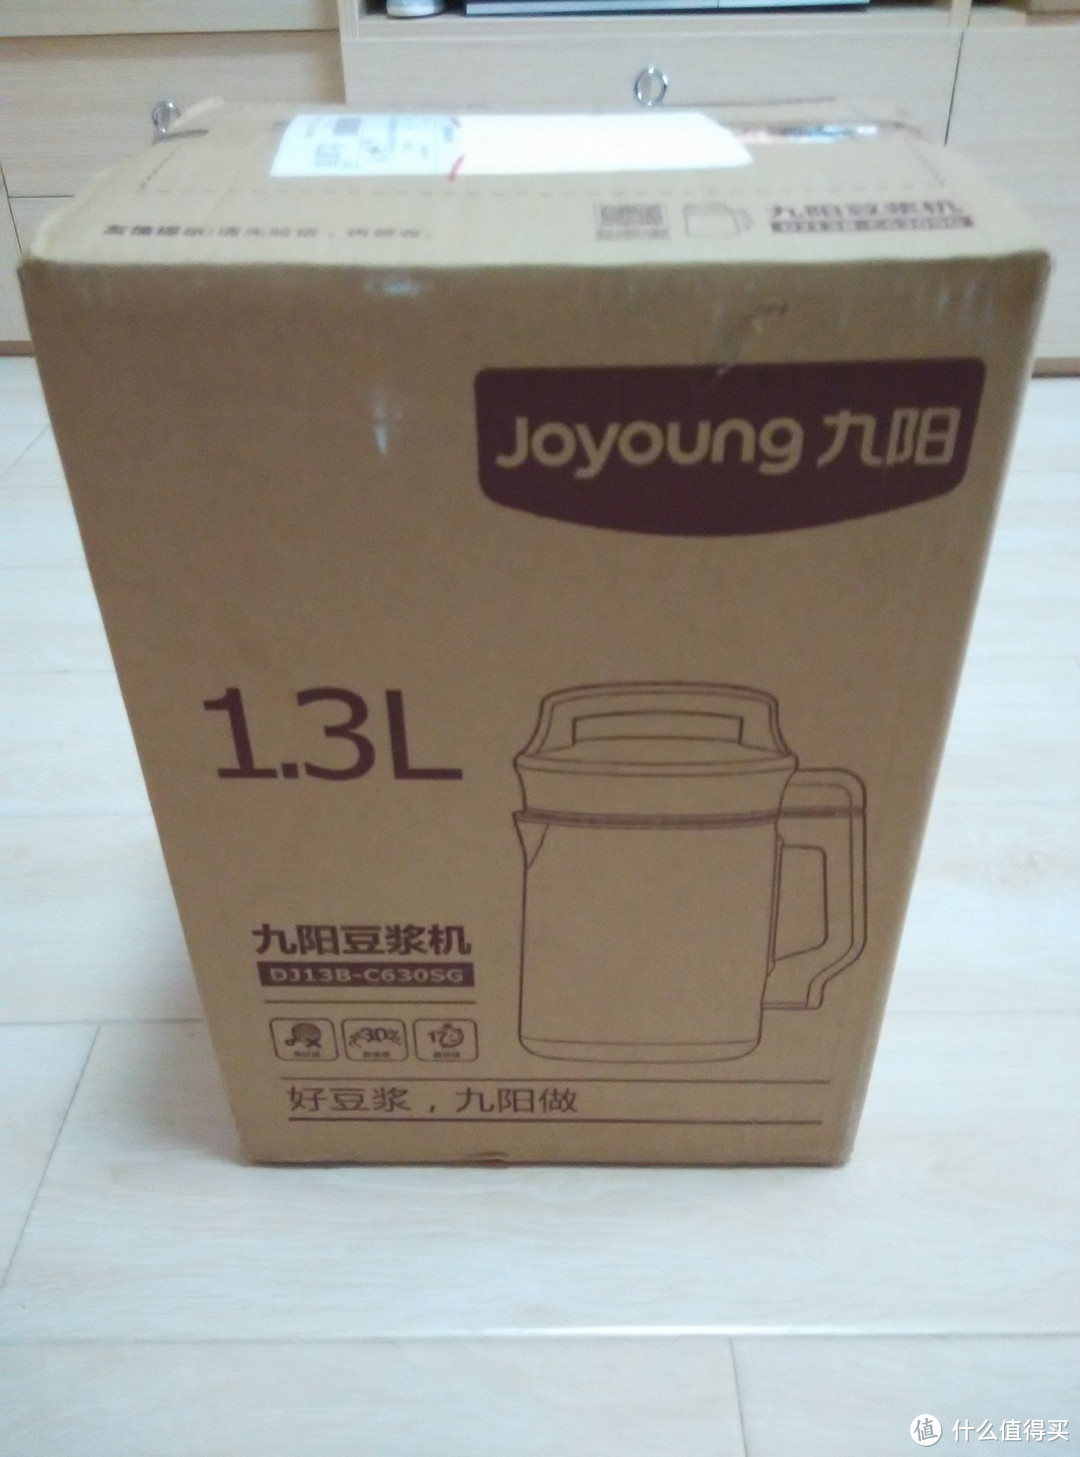 Joyoung 九阳 DJ13B-C630SG 免滤豆浆机使用报告